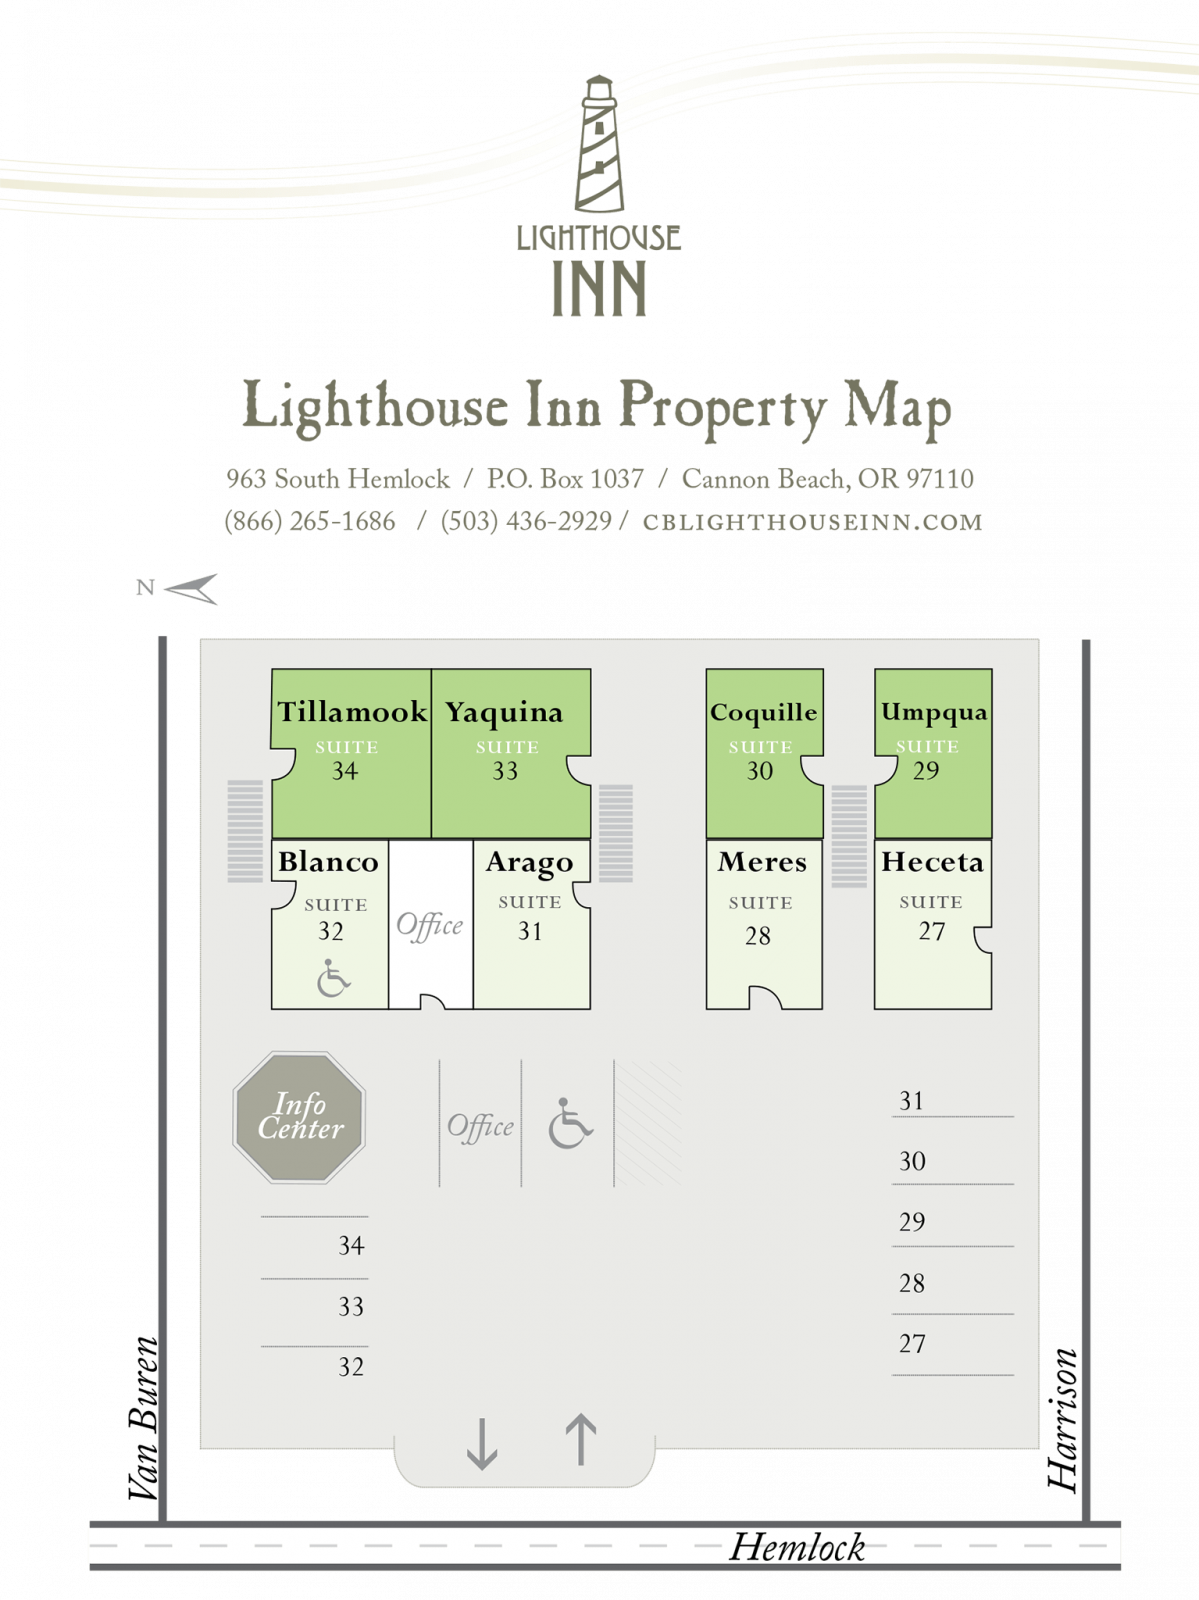 Lighthouse Inn Property Map